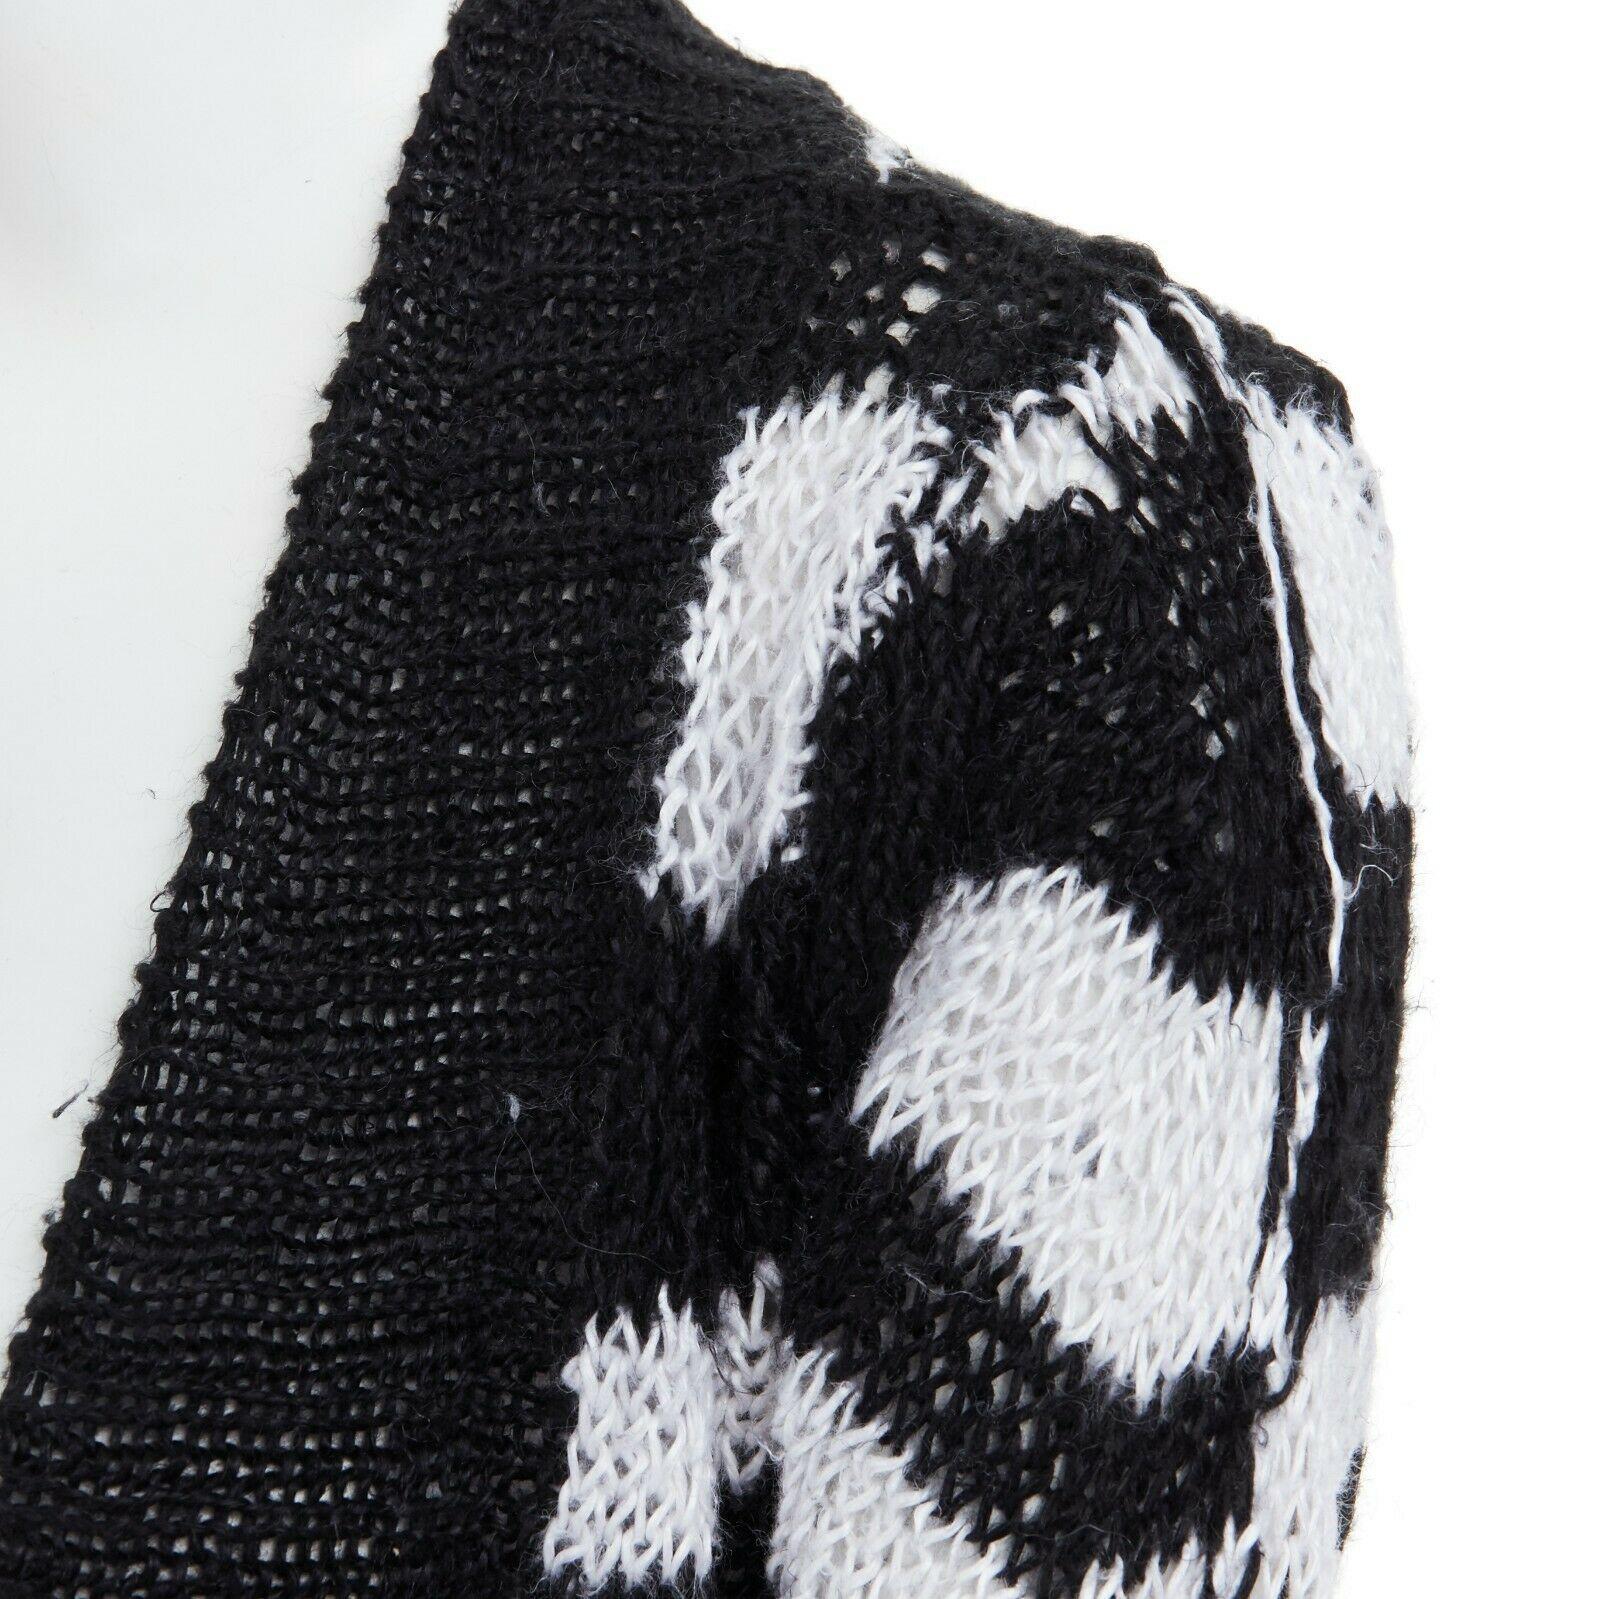 ANN DEMEULEMEESTER 100% linen black white stripe holey knit punk cardigan FR36 S 1